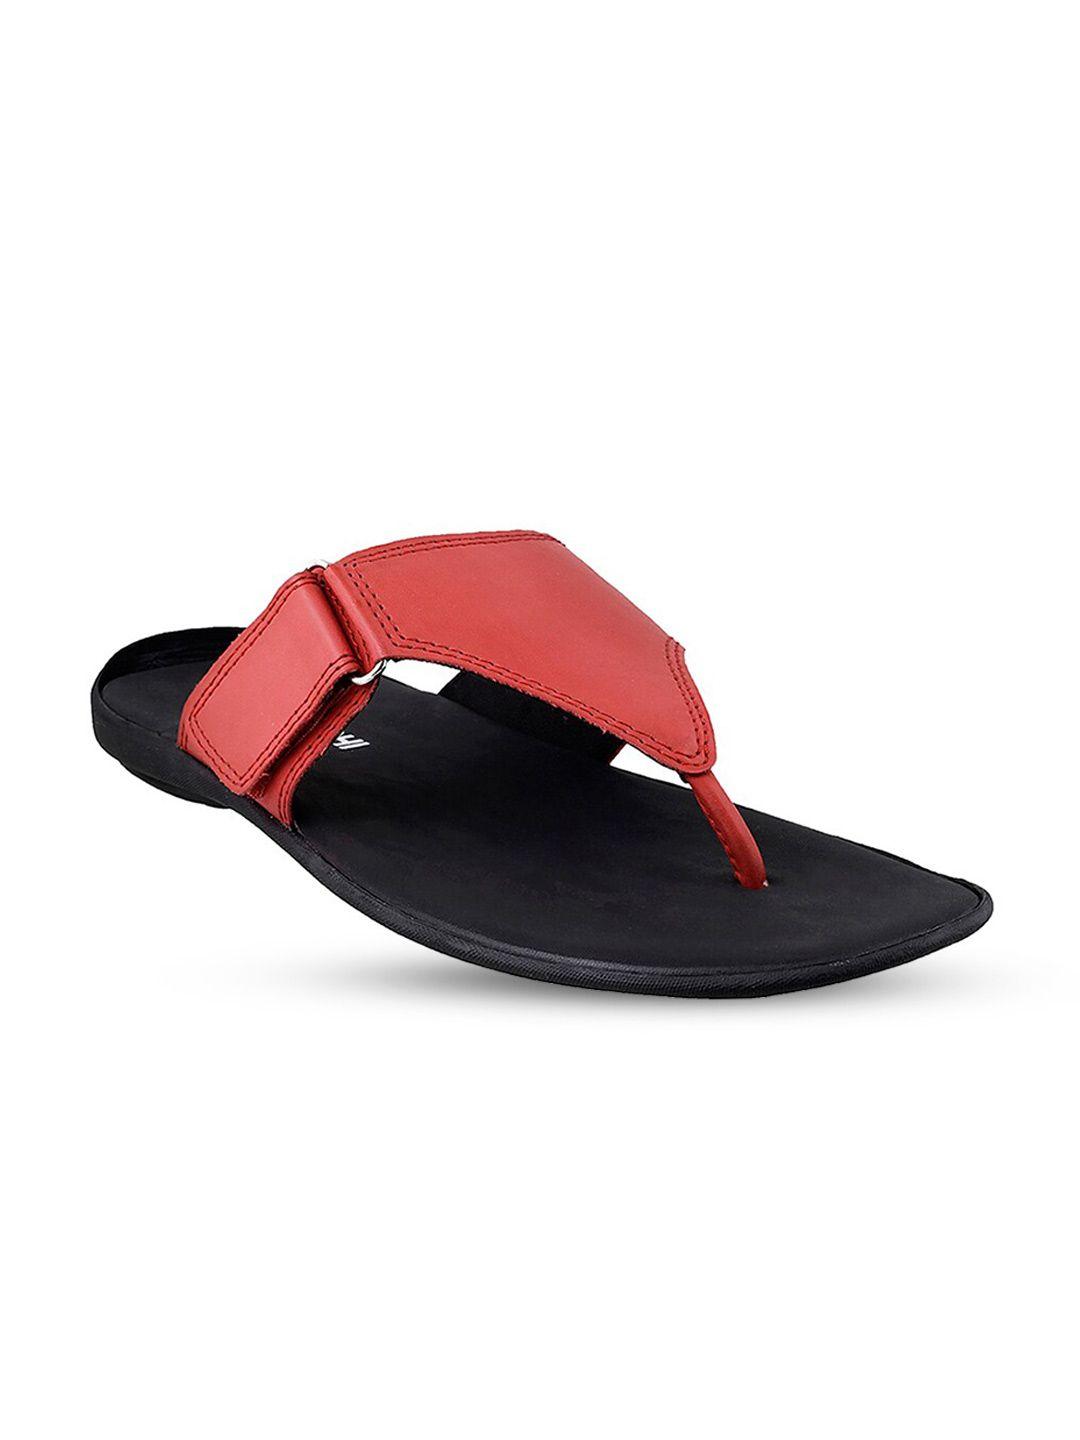 mochi men leather comfort sandals